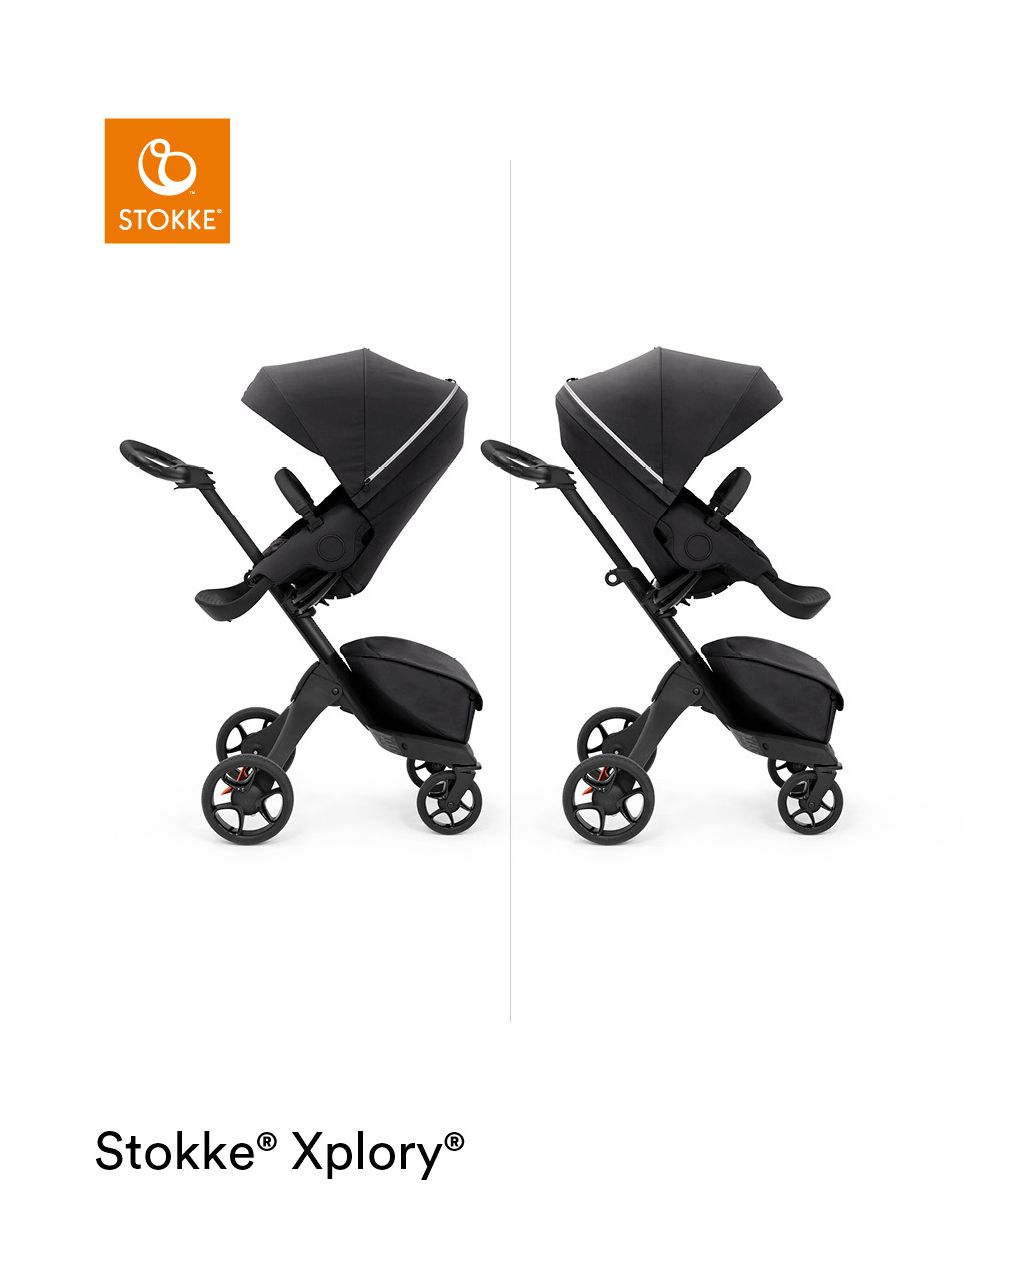 Stokke® xplory® x design único para trazer você perto do seu bebê - Stokke